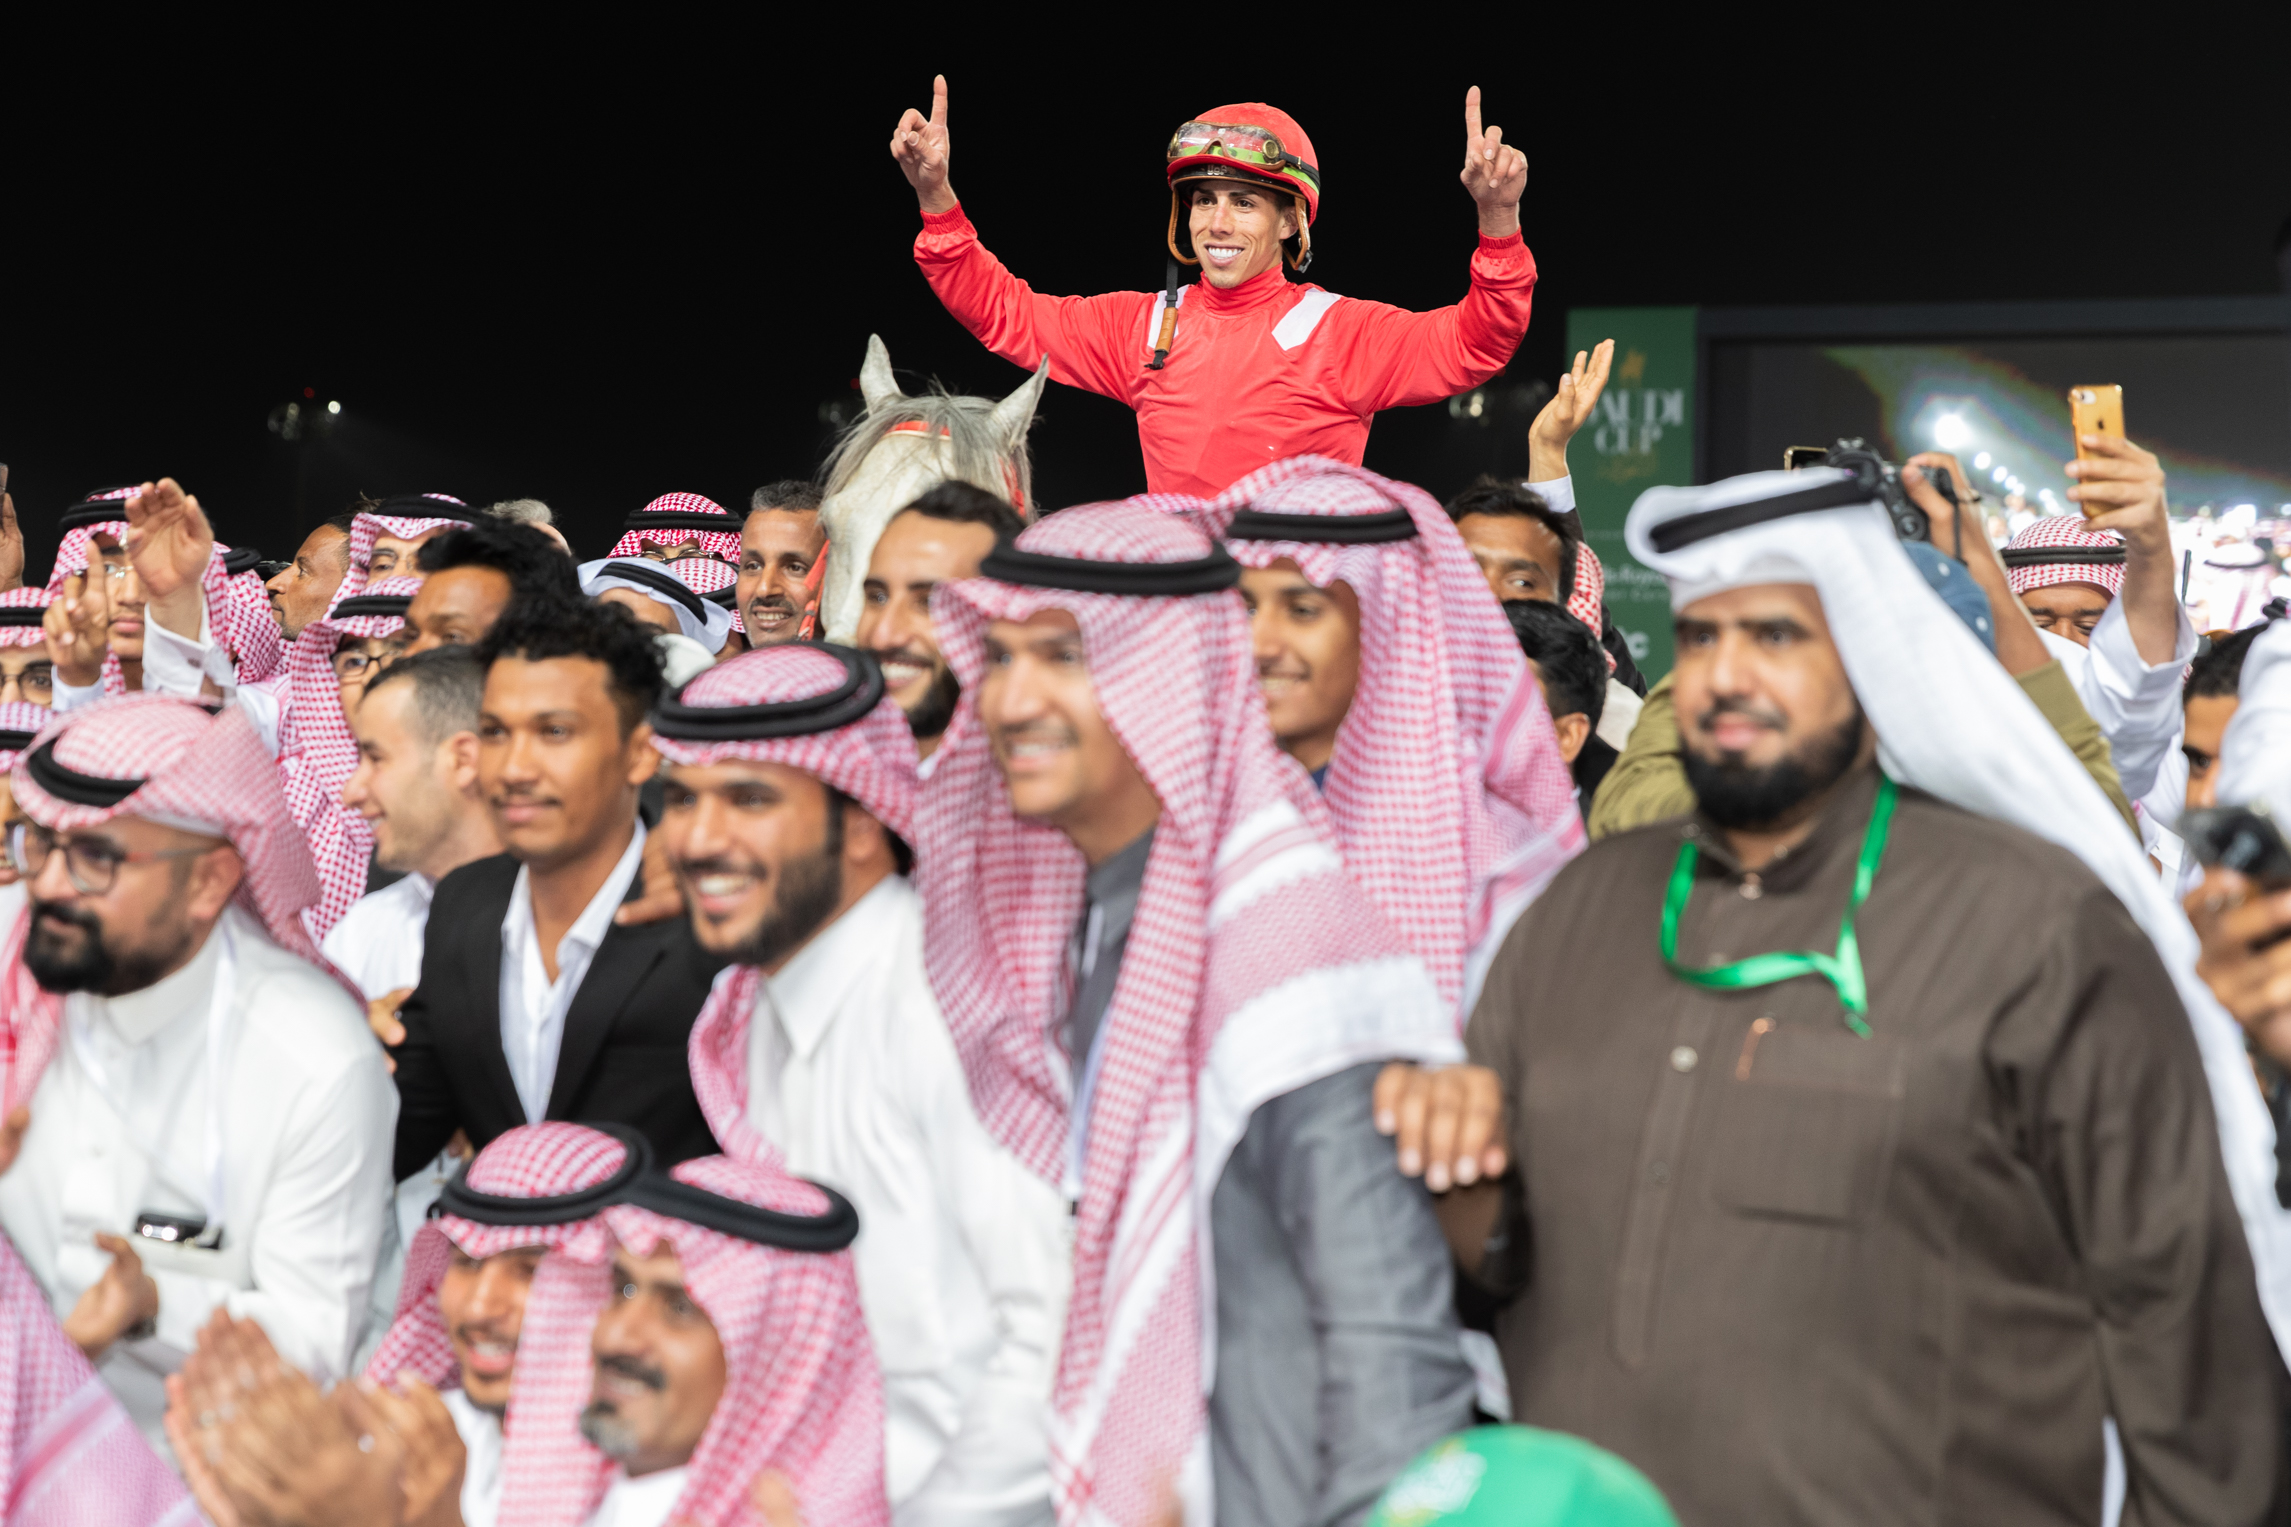 Local celebration: Irad Ortiz Jr and the Saudi-trained New York Central after winning the $1.5m Saudia Cup Sprint. Photo: Jockey Club of Saudi Arabia